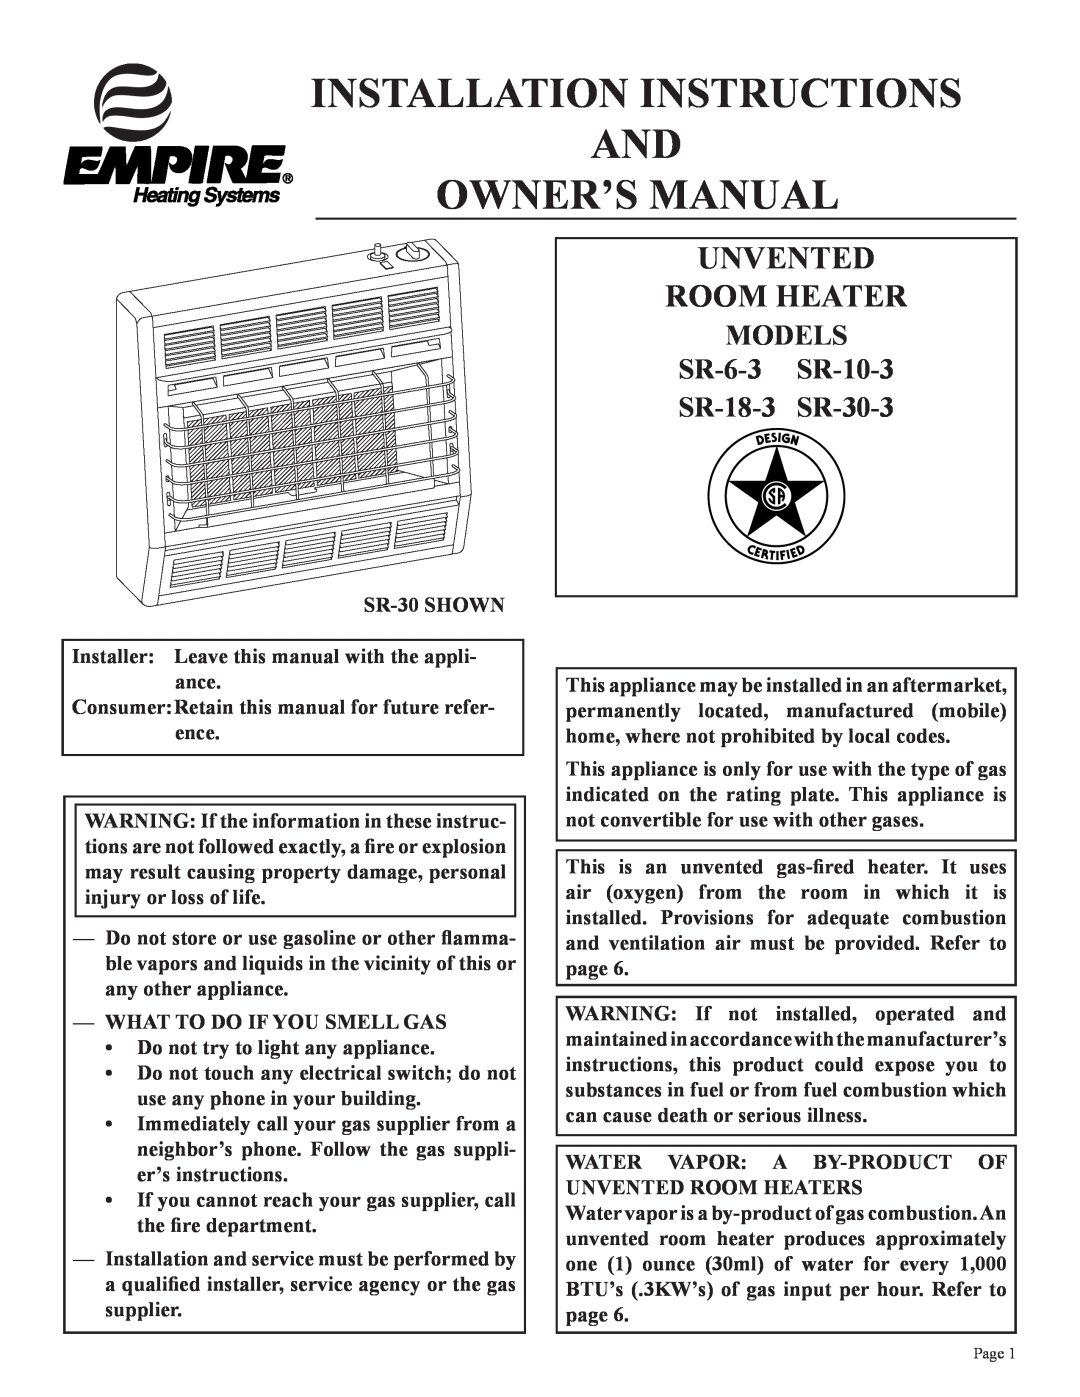 Empire Comfort Systems installation instructions MODELS SR-6-3 SR-10-3 SR-18-3 SR-30-3, Unvented Room Heater 